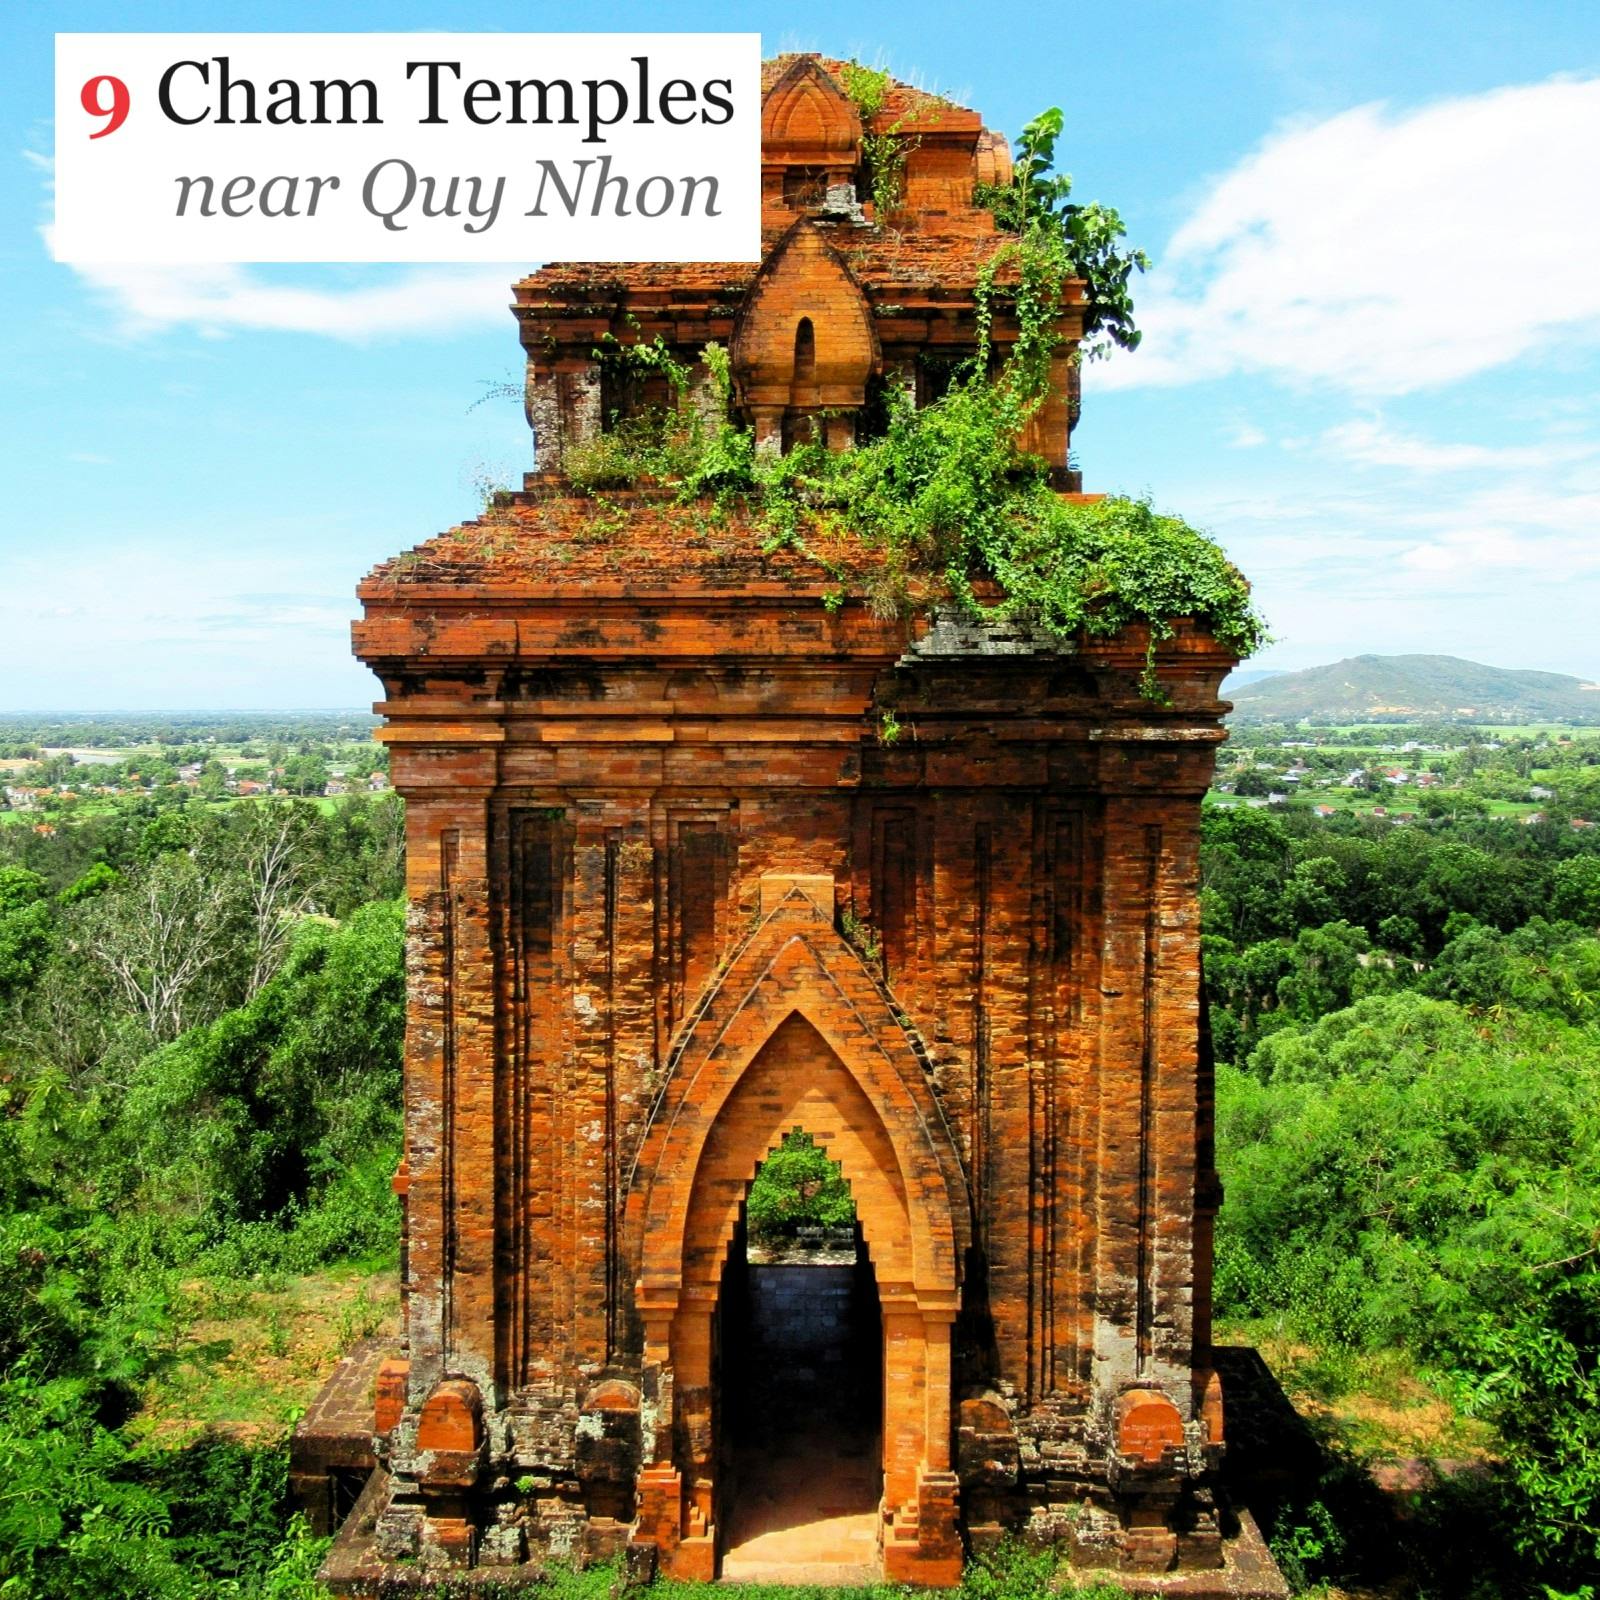 Cham Temples near Quy Nhon, Vietnam